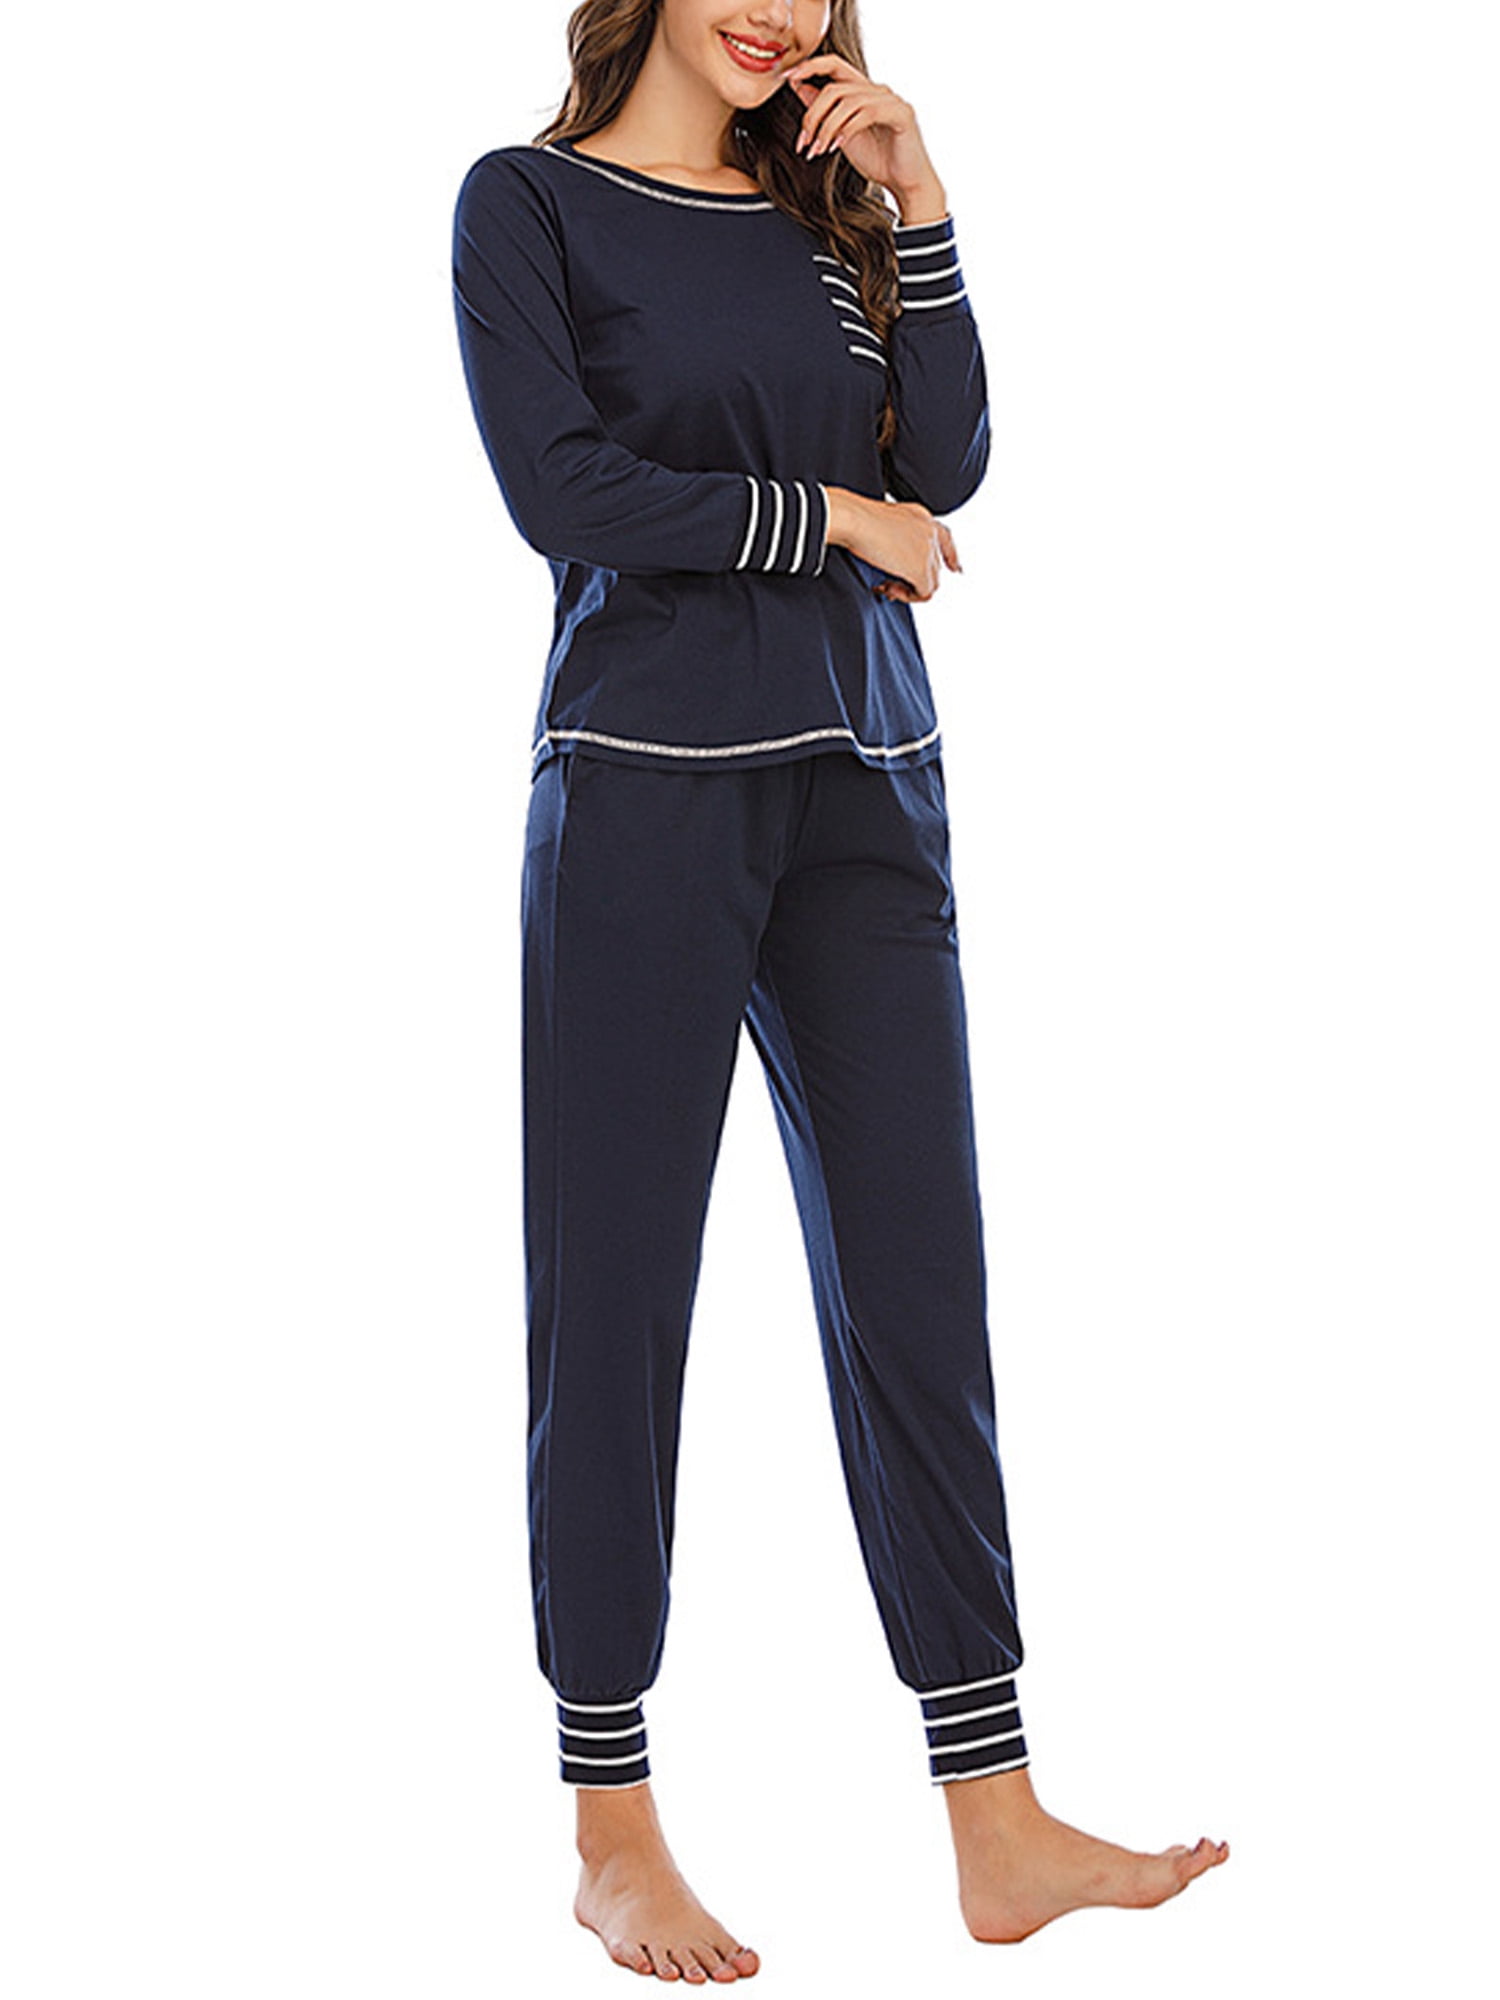 Details about   Womens One Piece Navy Sleepwear Romper Pajama Comfortable Soft Longsleeve